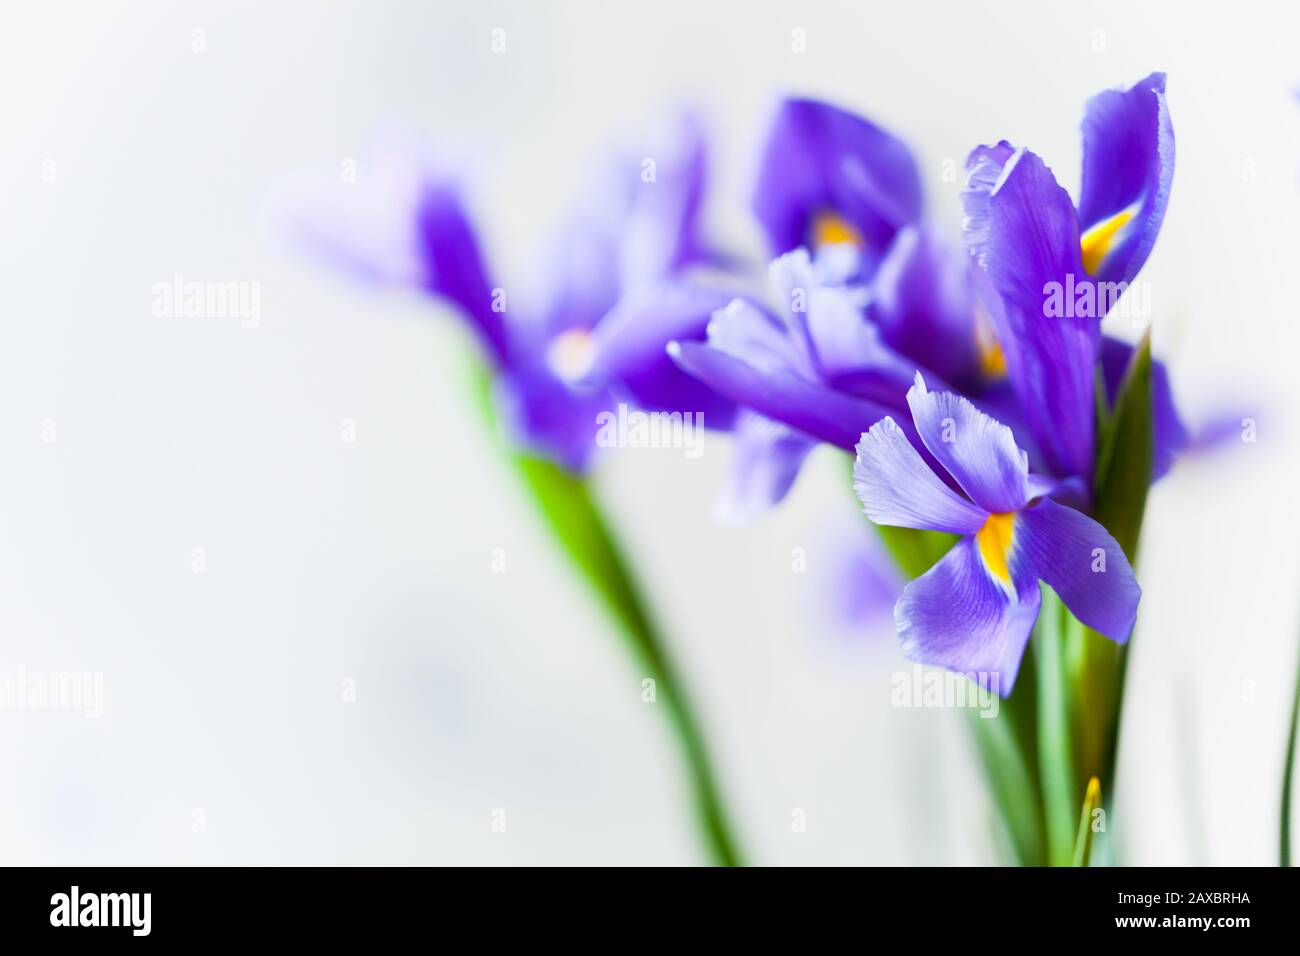 Japanese iris, flowers over light gray blurred background, macro photo with selective focus. Iris Laevigata Stock Photo